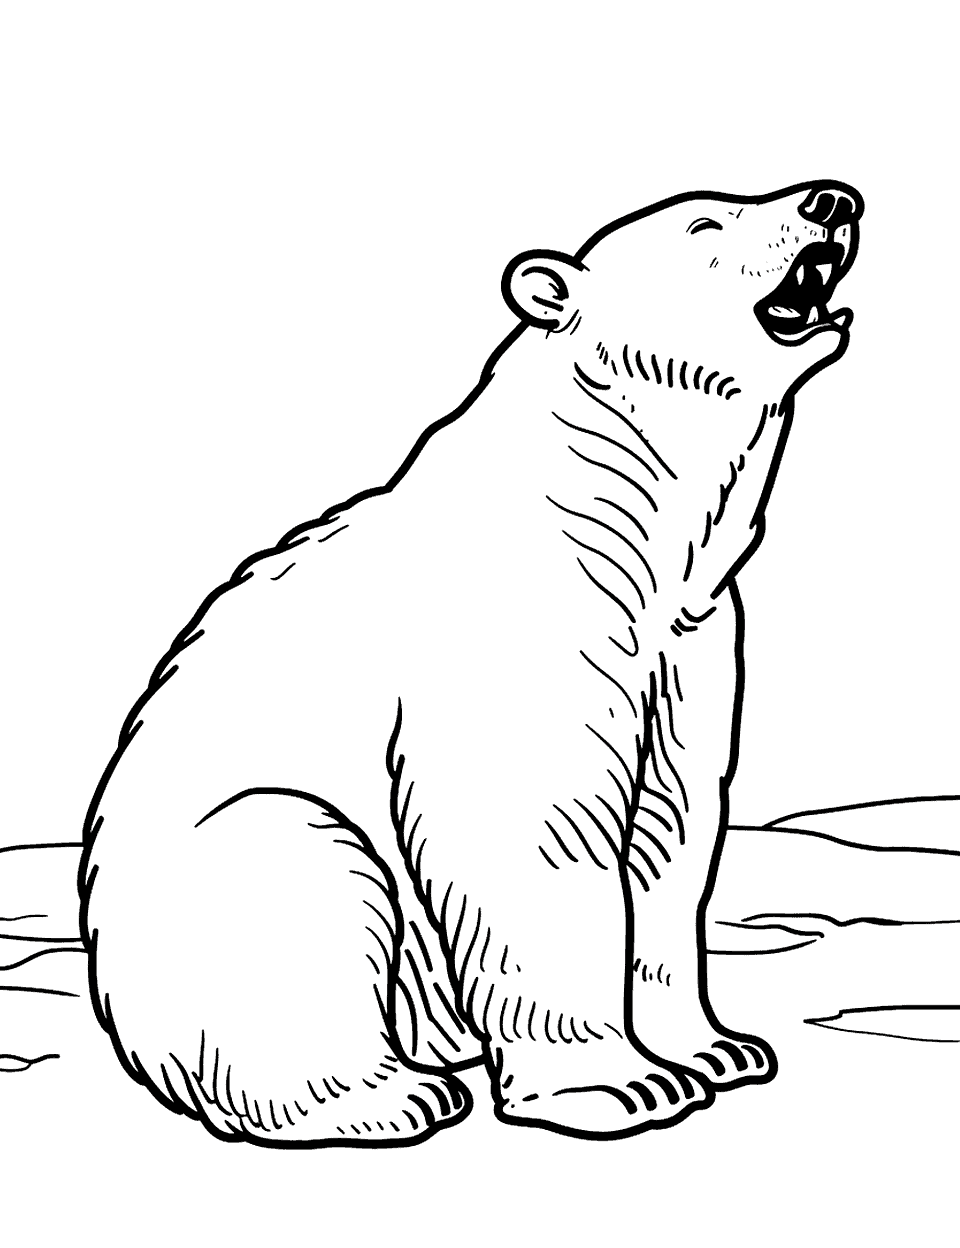 Sleepy Polar Bear Coloring Page - A polar bear yawning as it prepares to sleep in the snow.